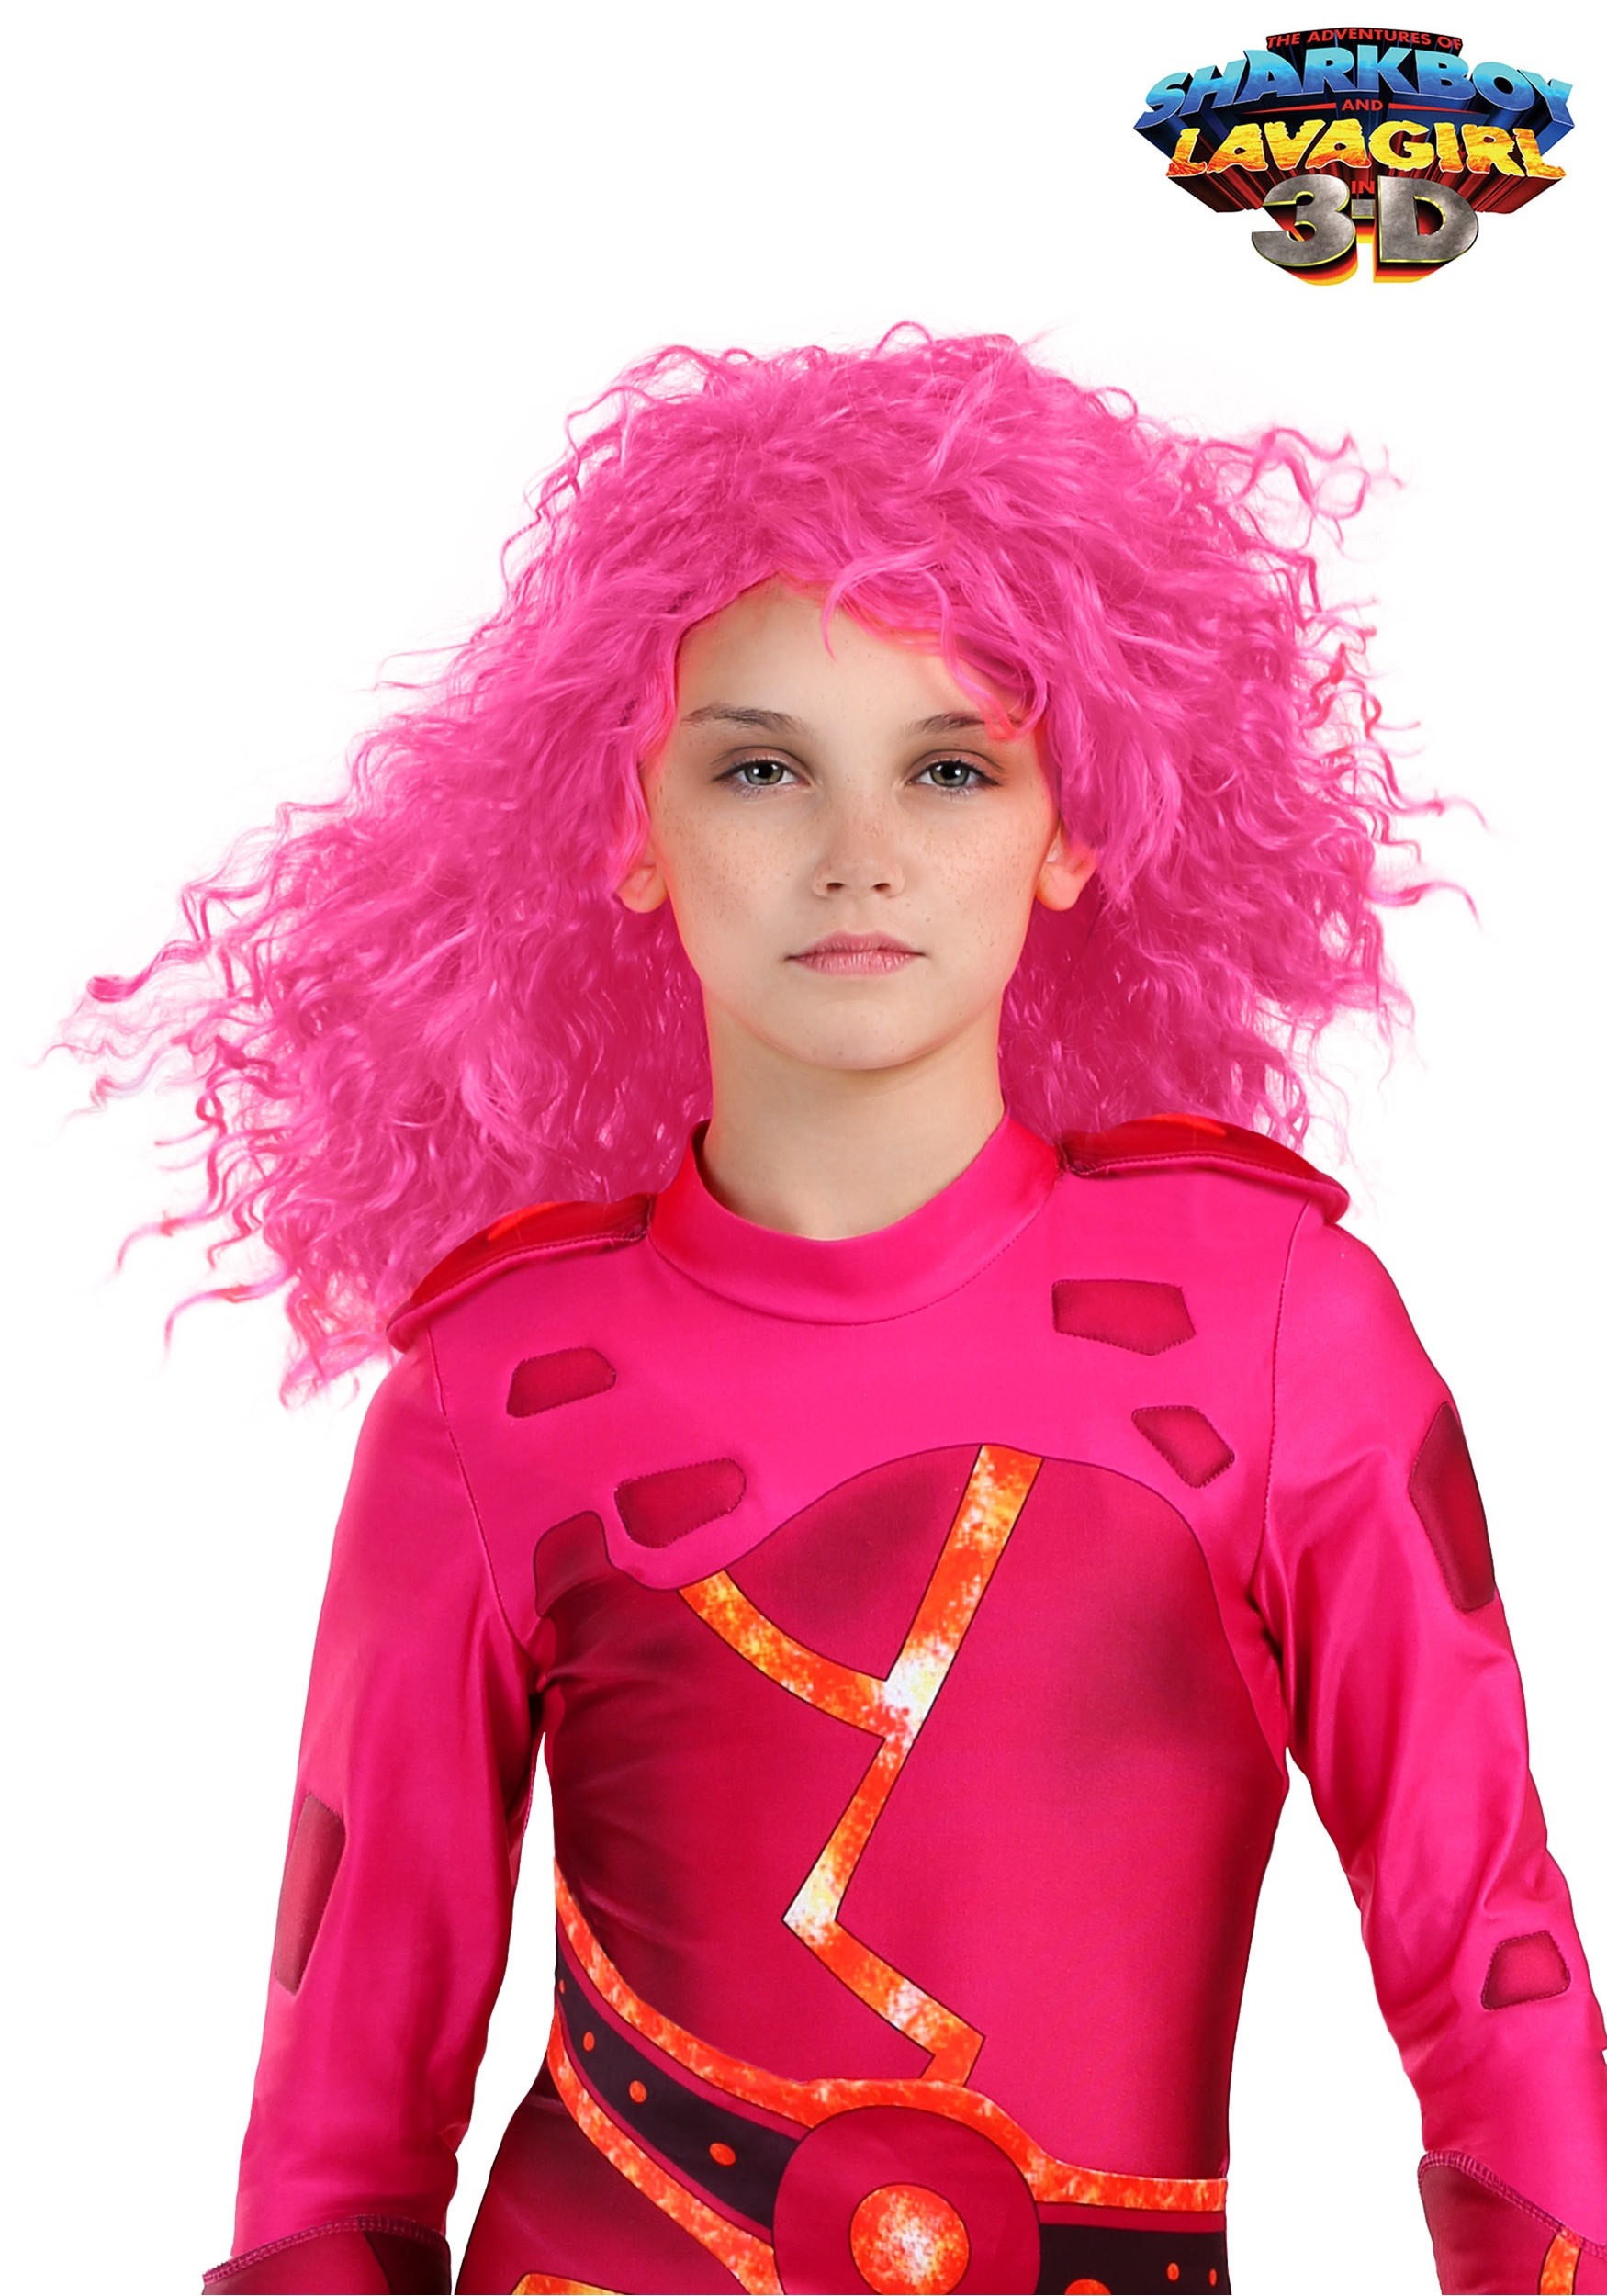 Kids' Wigs - Halloween Costume Wigs for Kids